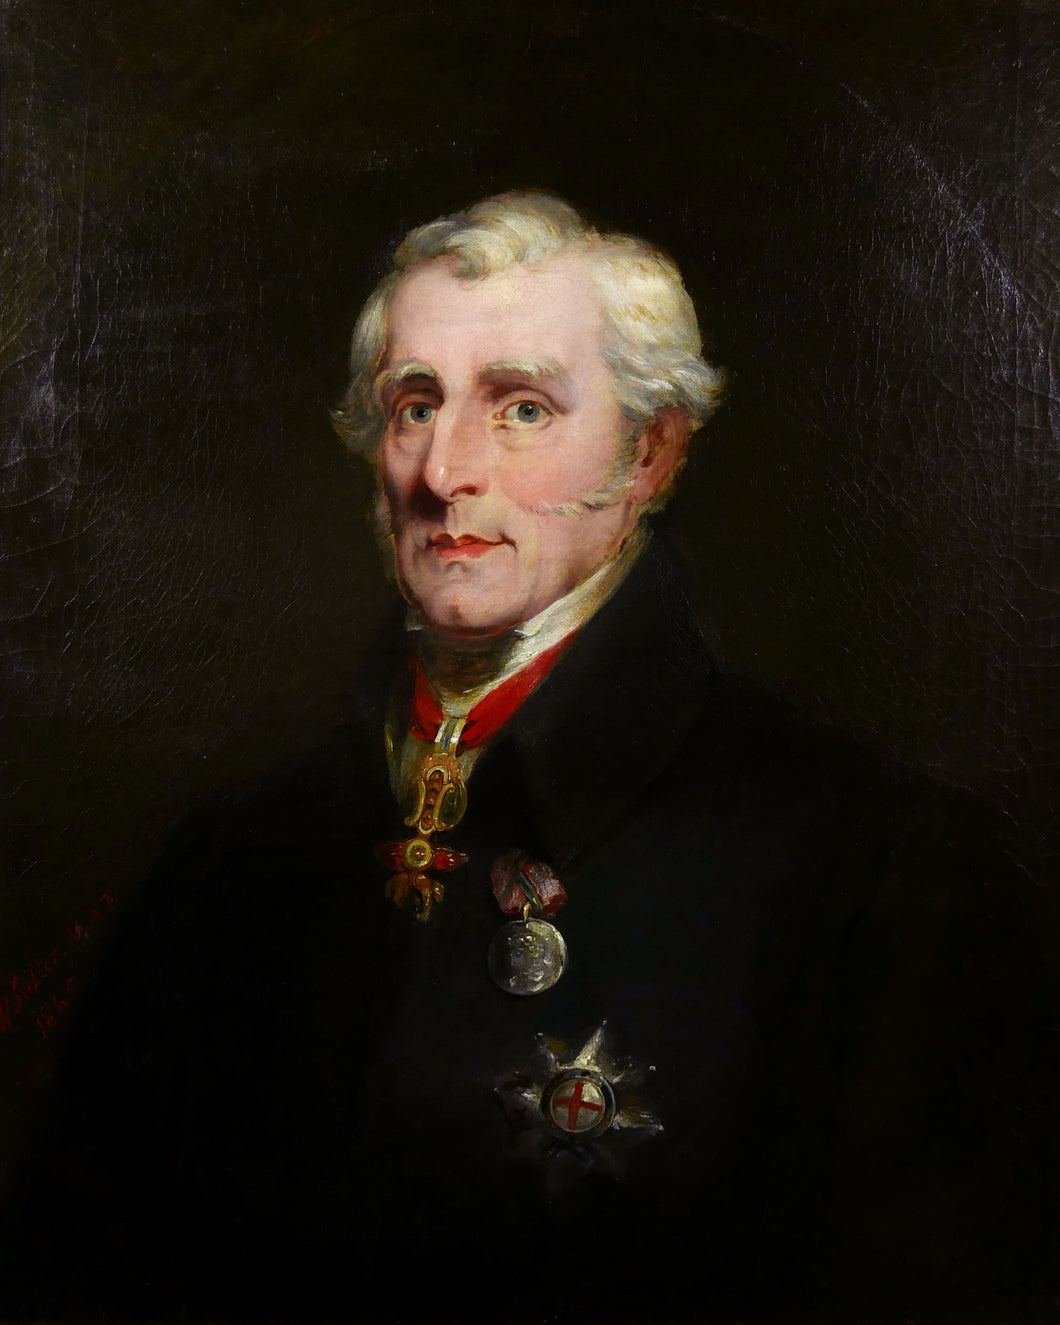 Arthur Wellesley, 1st Duke of Wellington - William Salter, M.A.F., 1845